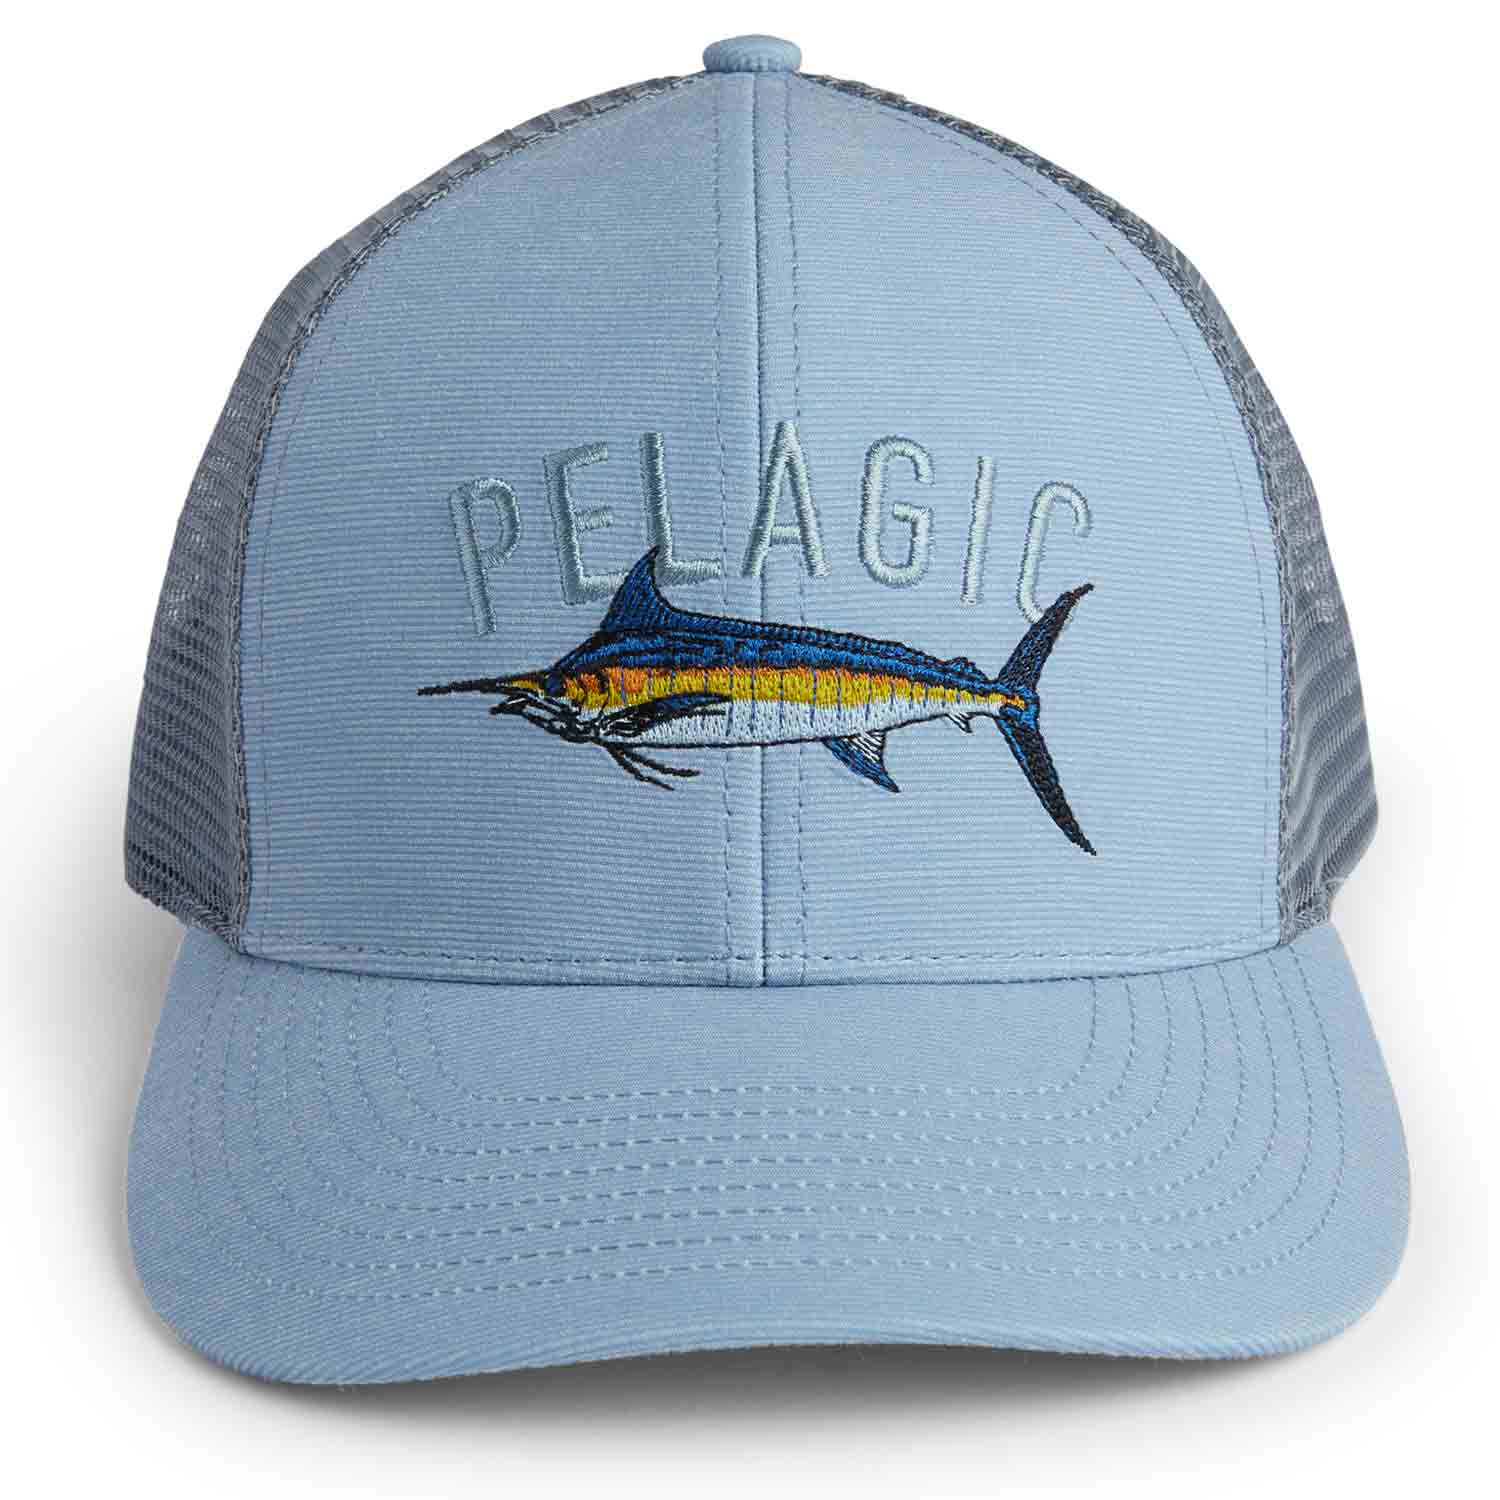 Pelagic Hats Performance Trucker – Marine World